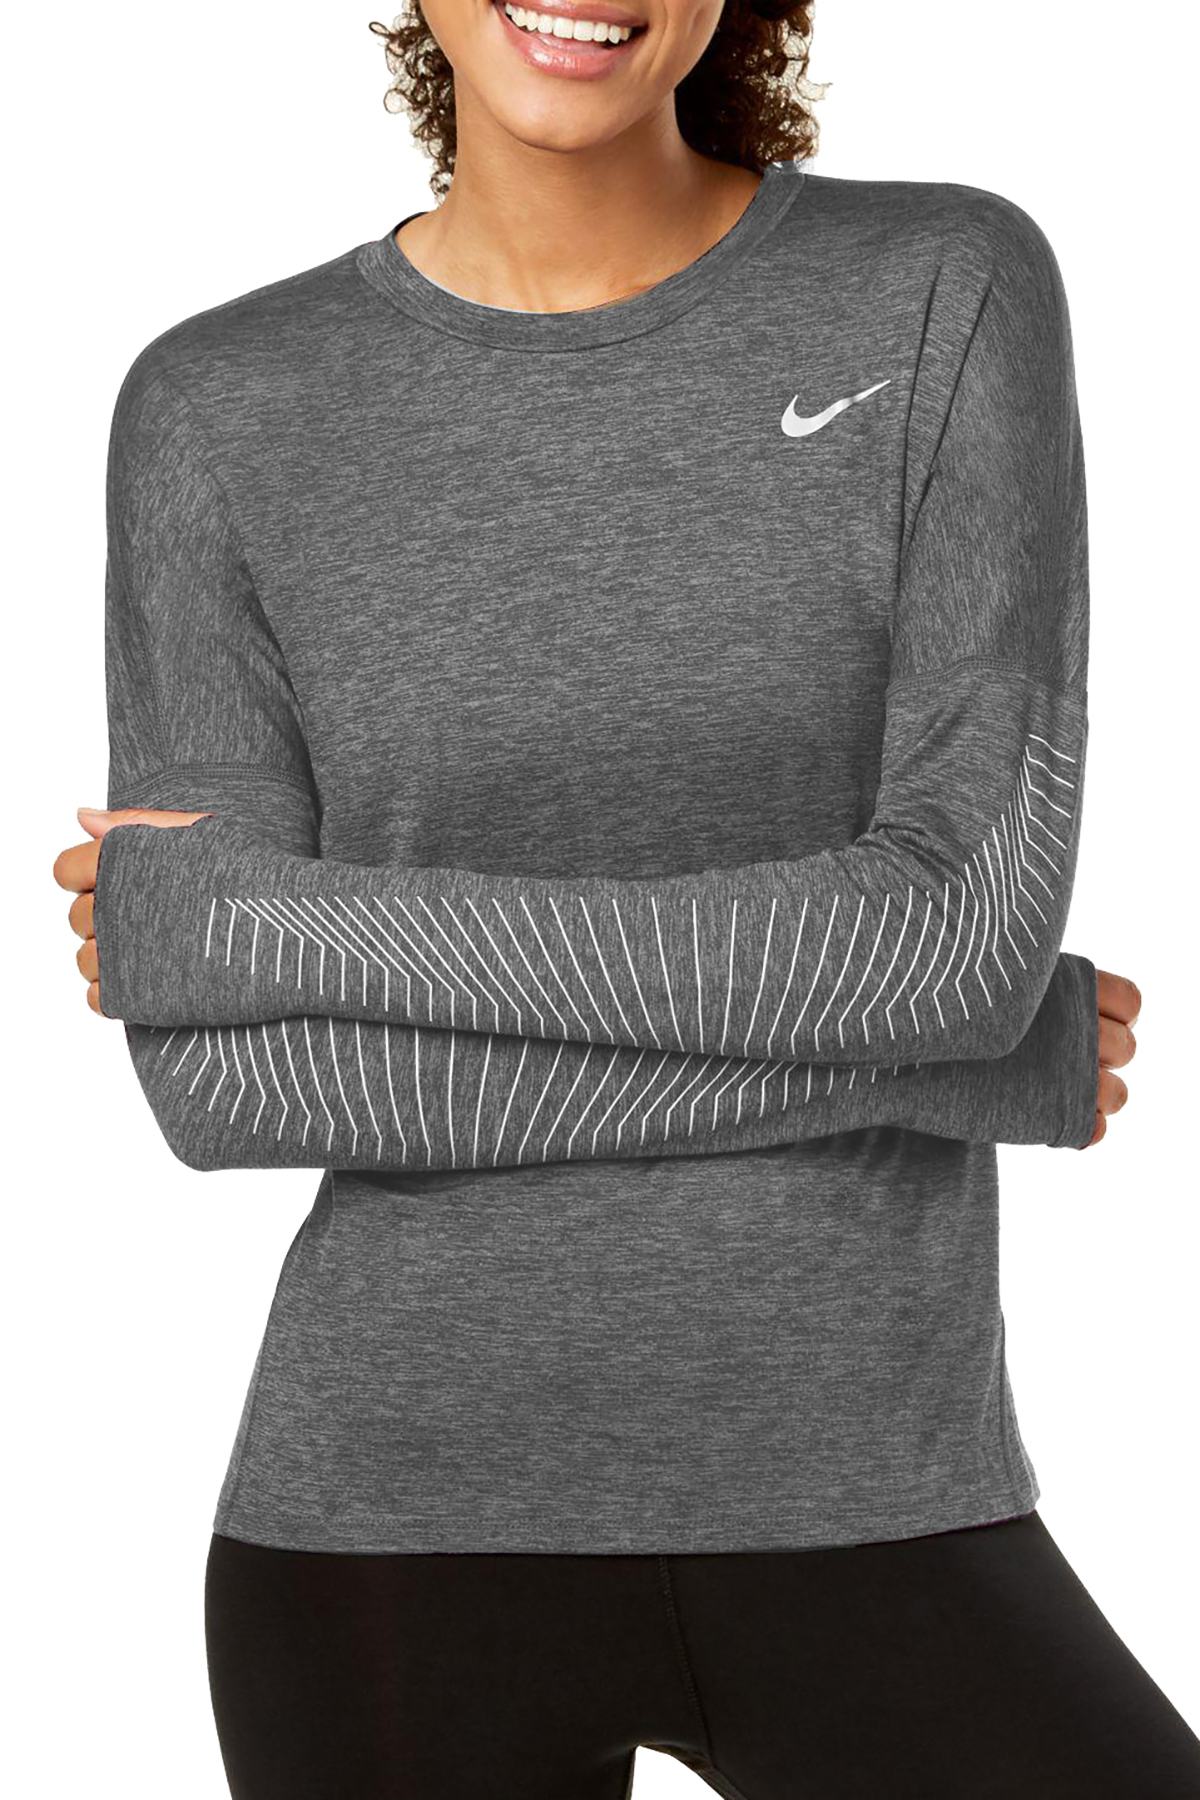 Nike Dark Grey-Heather Dry Element Top